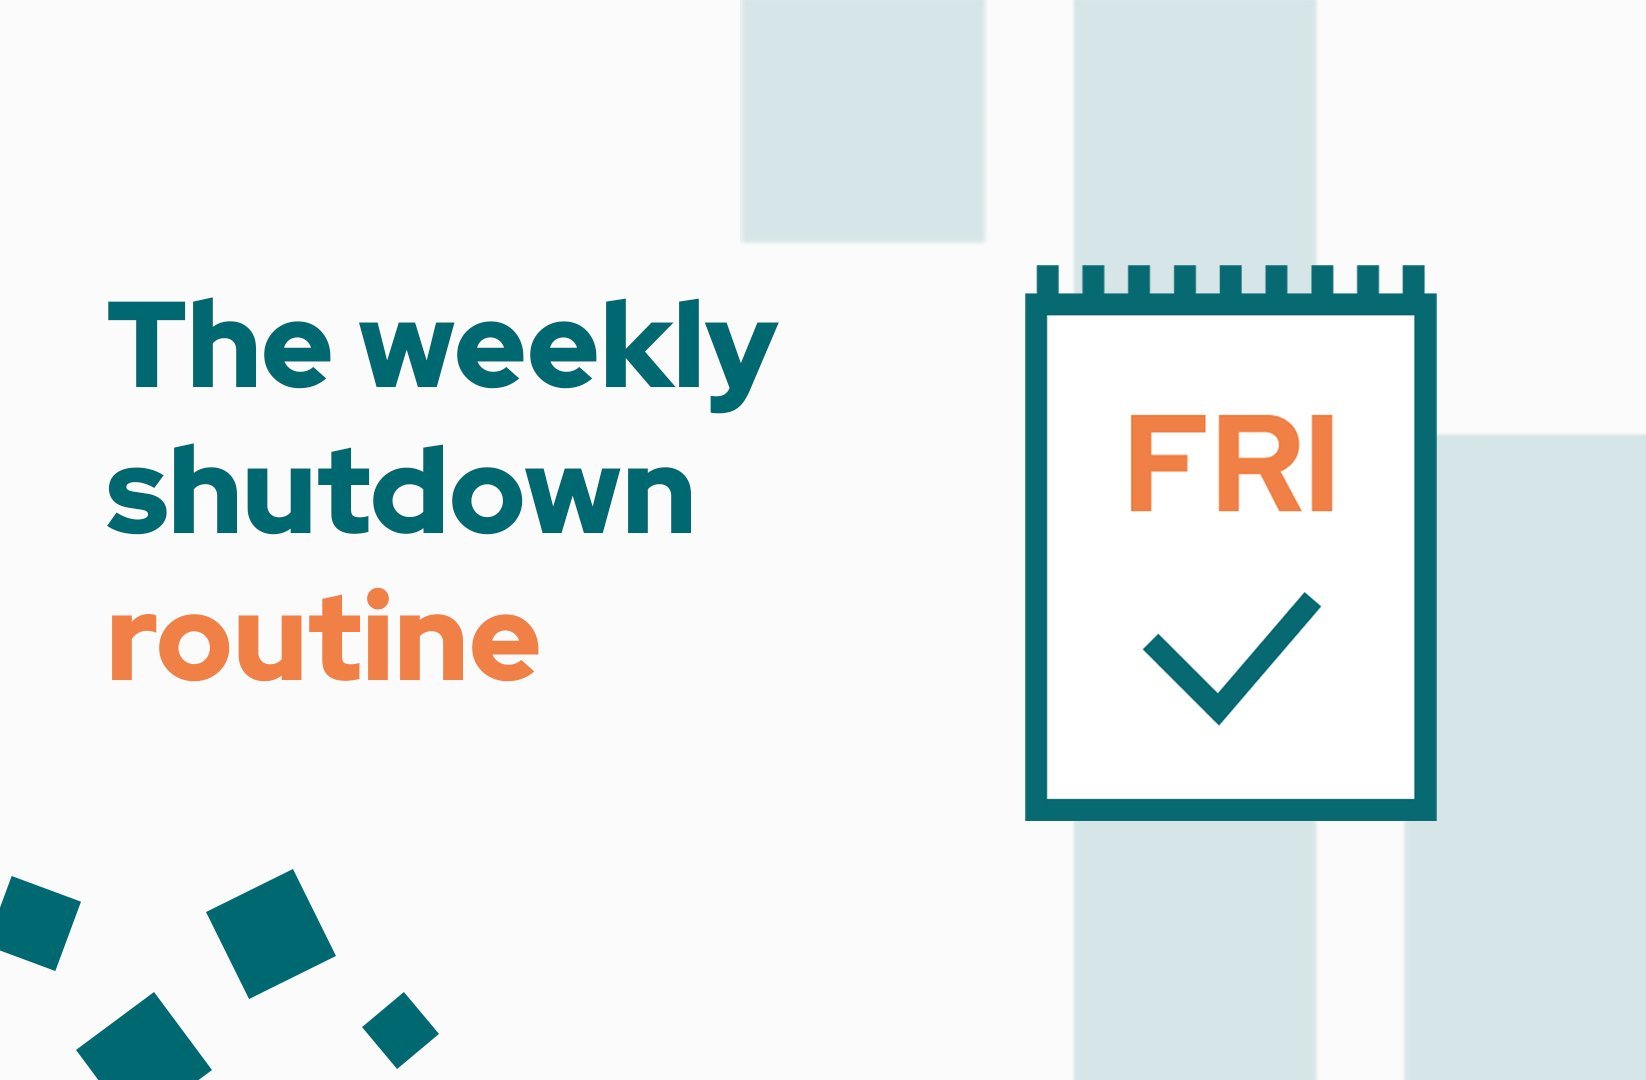 The weekly shutdown routine